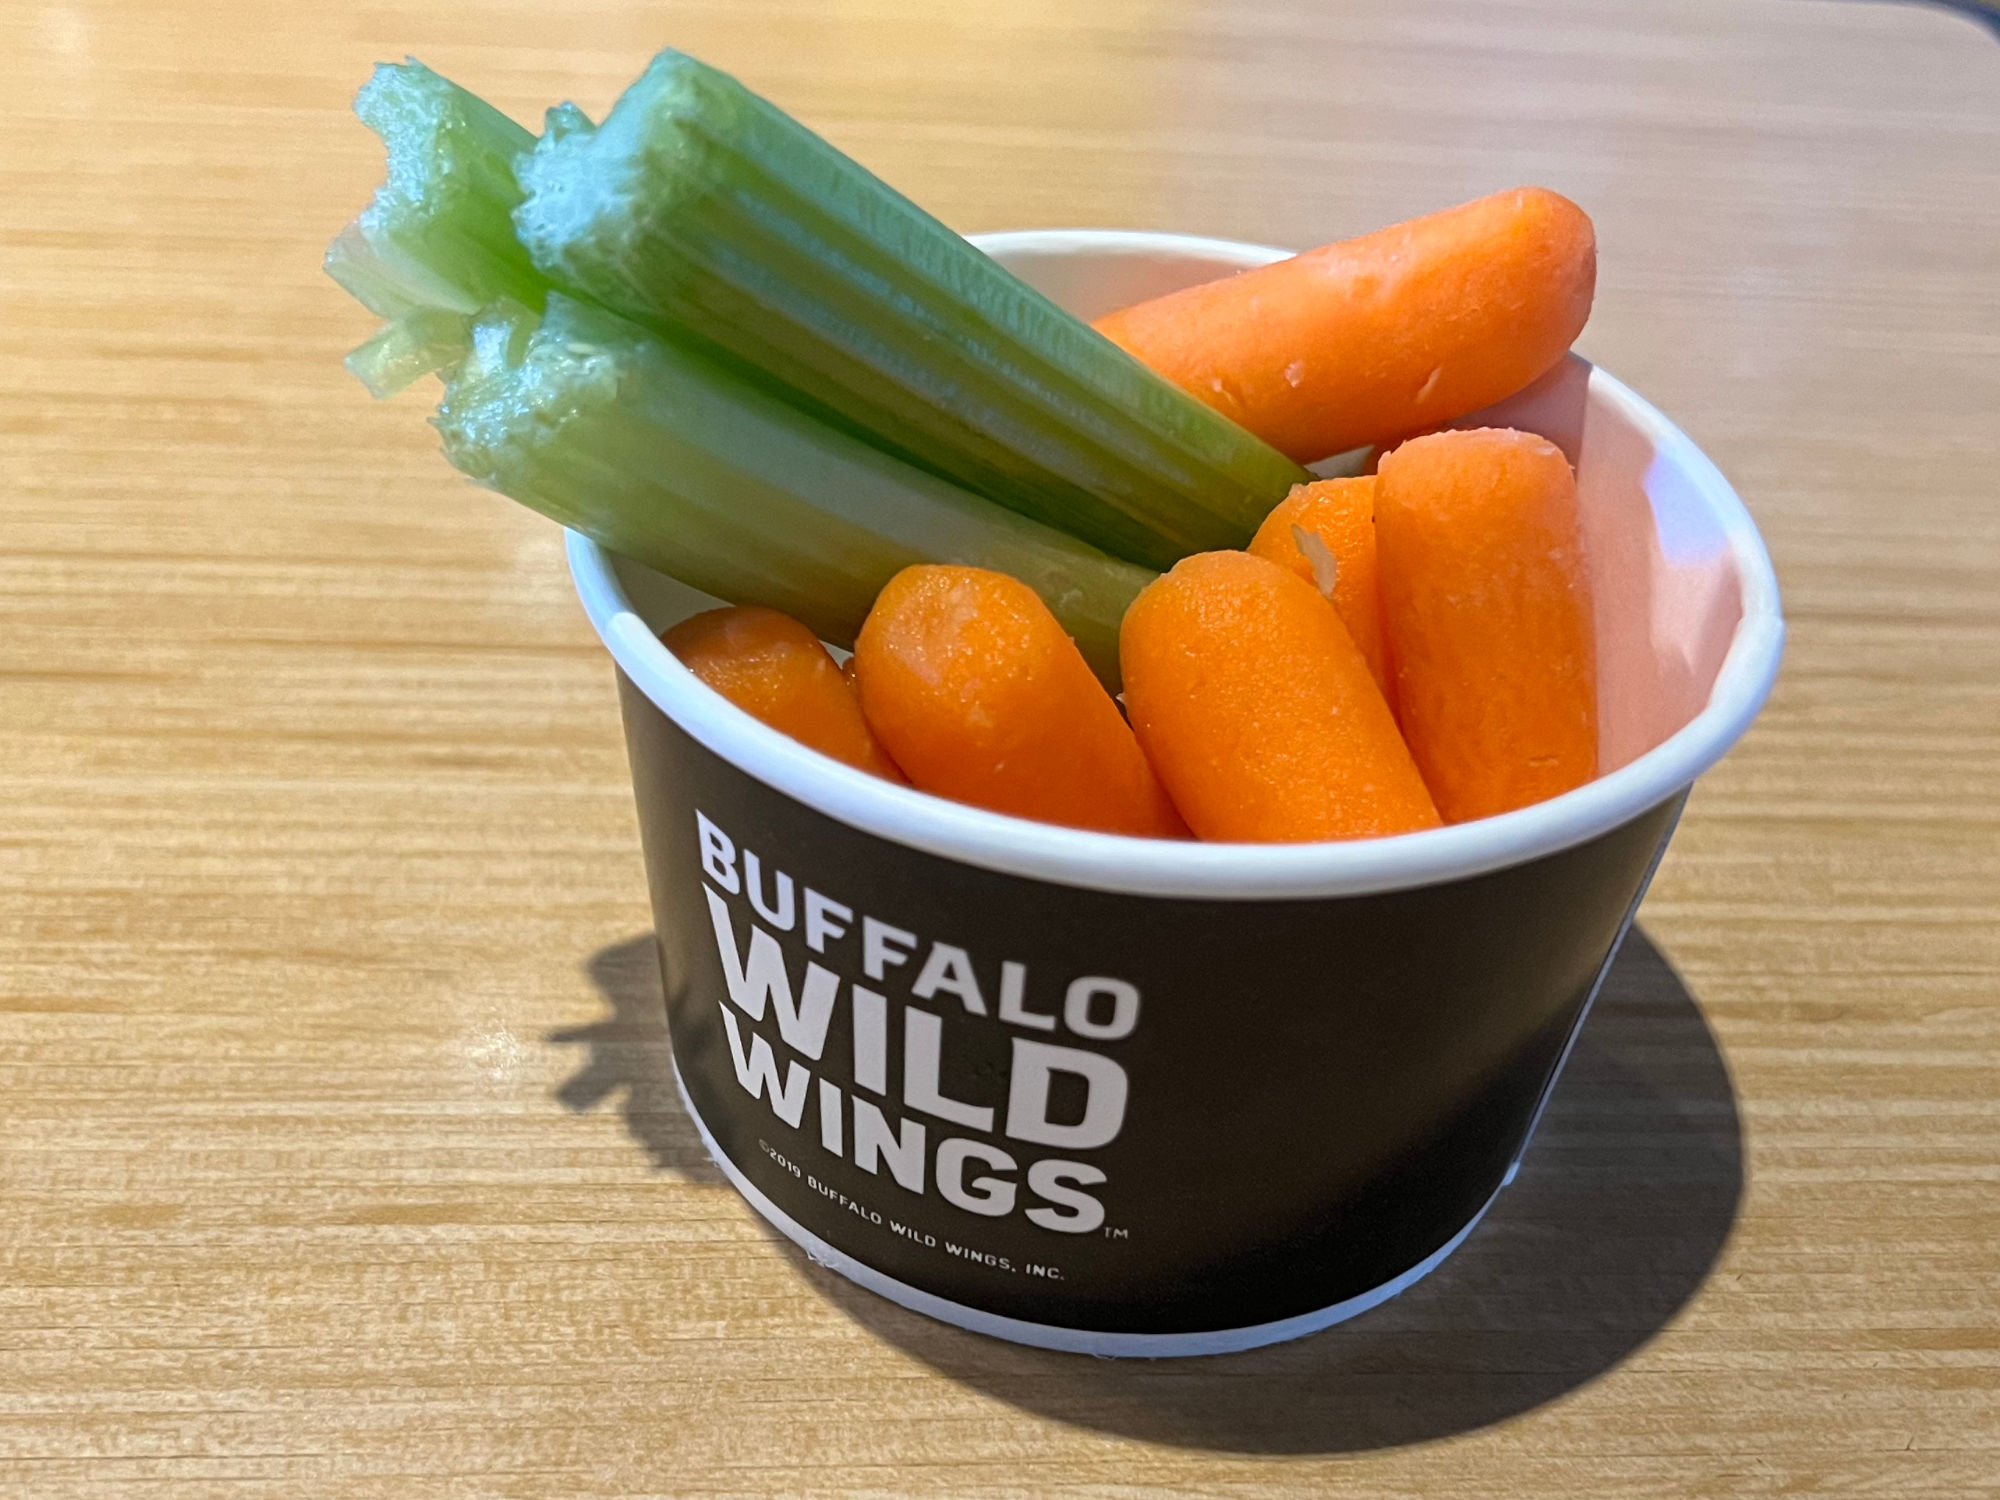 Buffalo Wild Wings Celery and Carrots